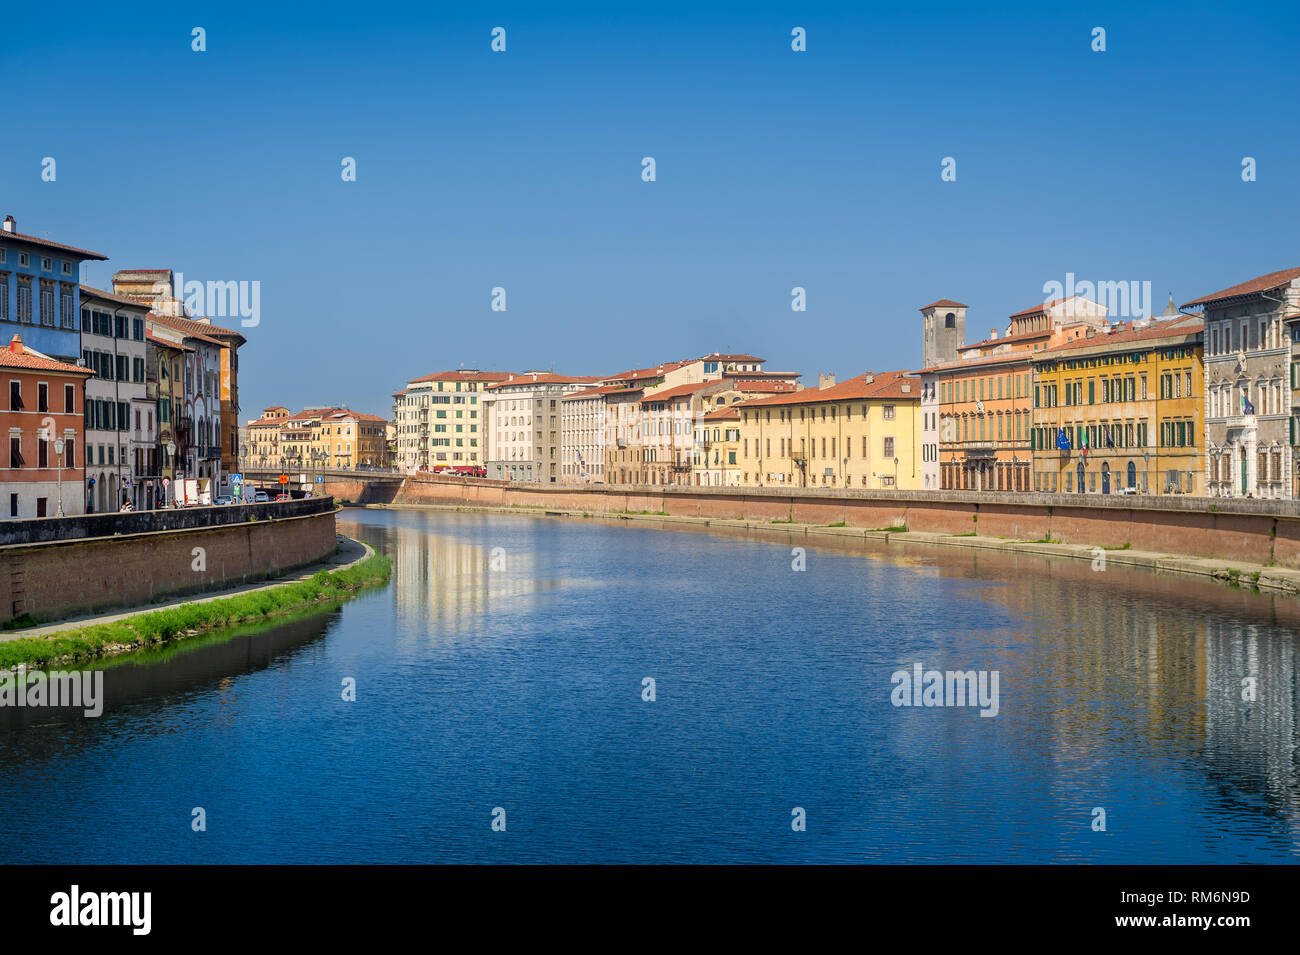 Alte Gebäude in Pisa am Fluss Arno Ufer. Toscana Provinz, Italien Stockfoto